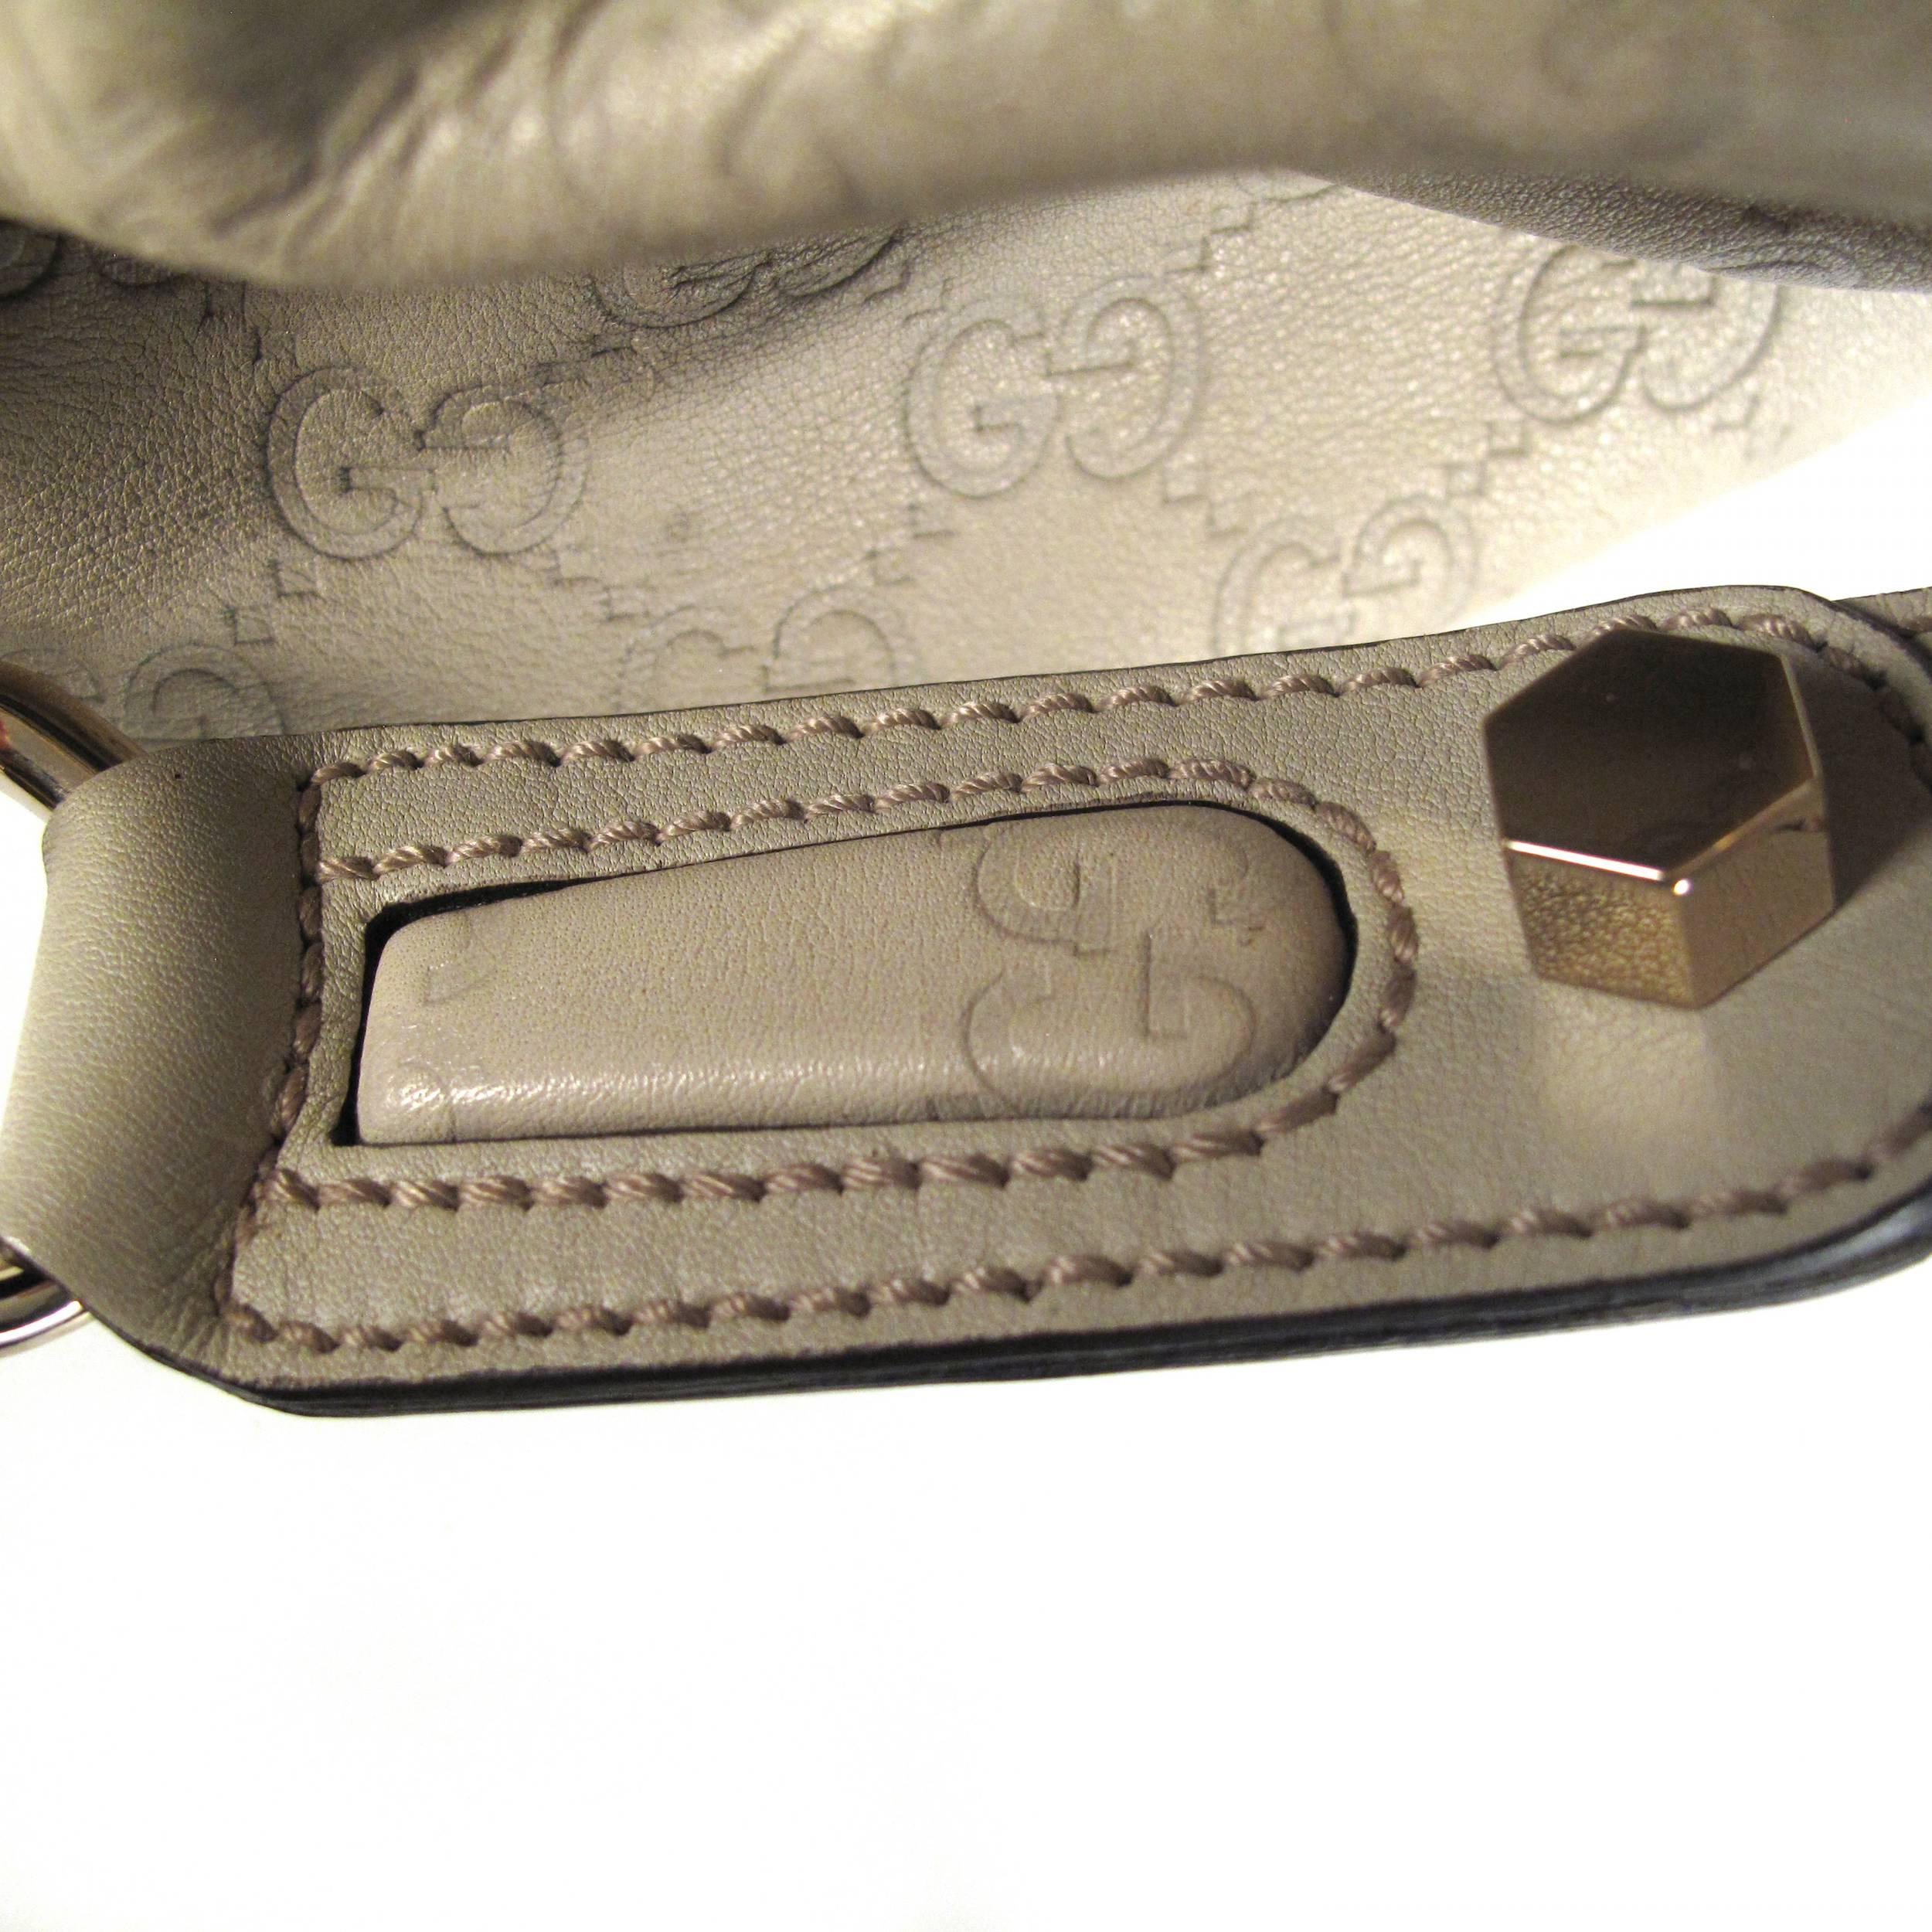 Women's Gucci Bamboo Leather Monogram Shoulder Bag - Tan Beige GG Gold Satchel Handbag